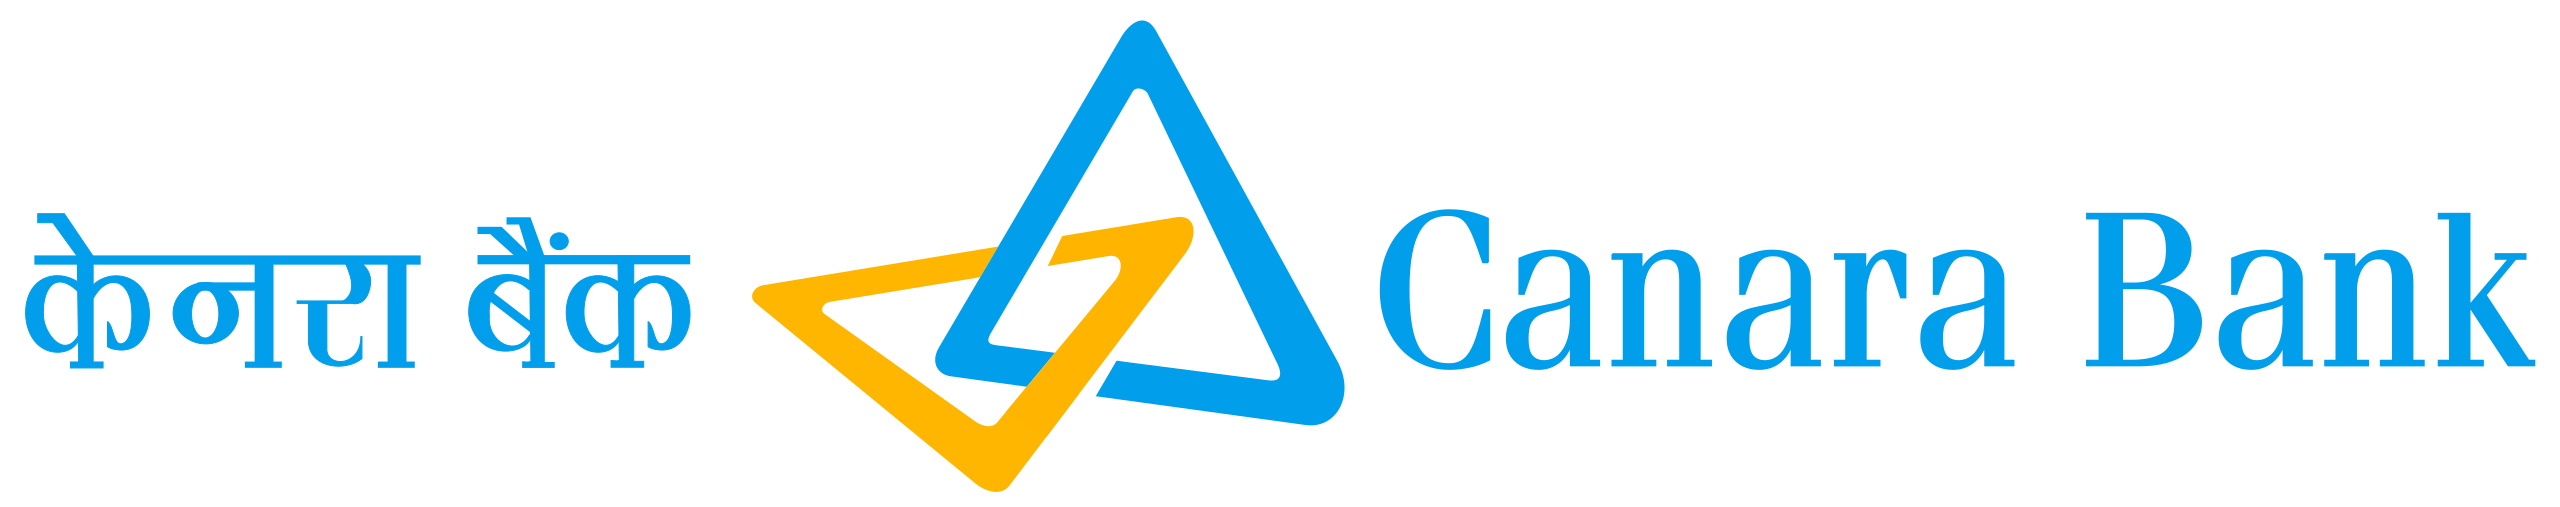 Canara Bank Logo.svg